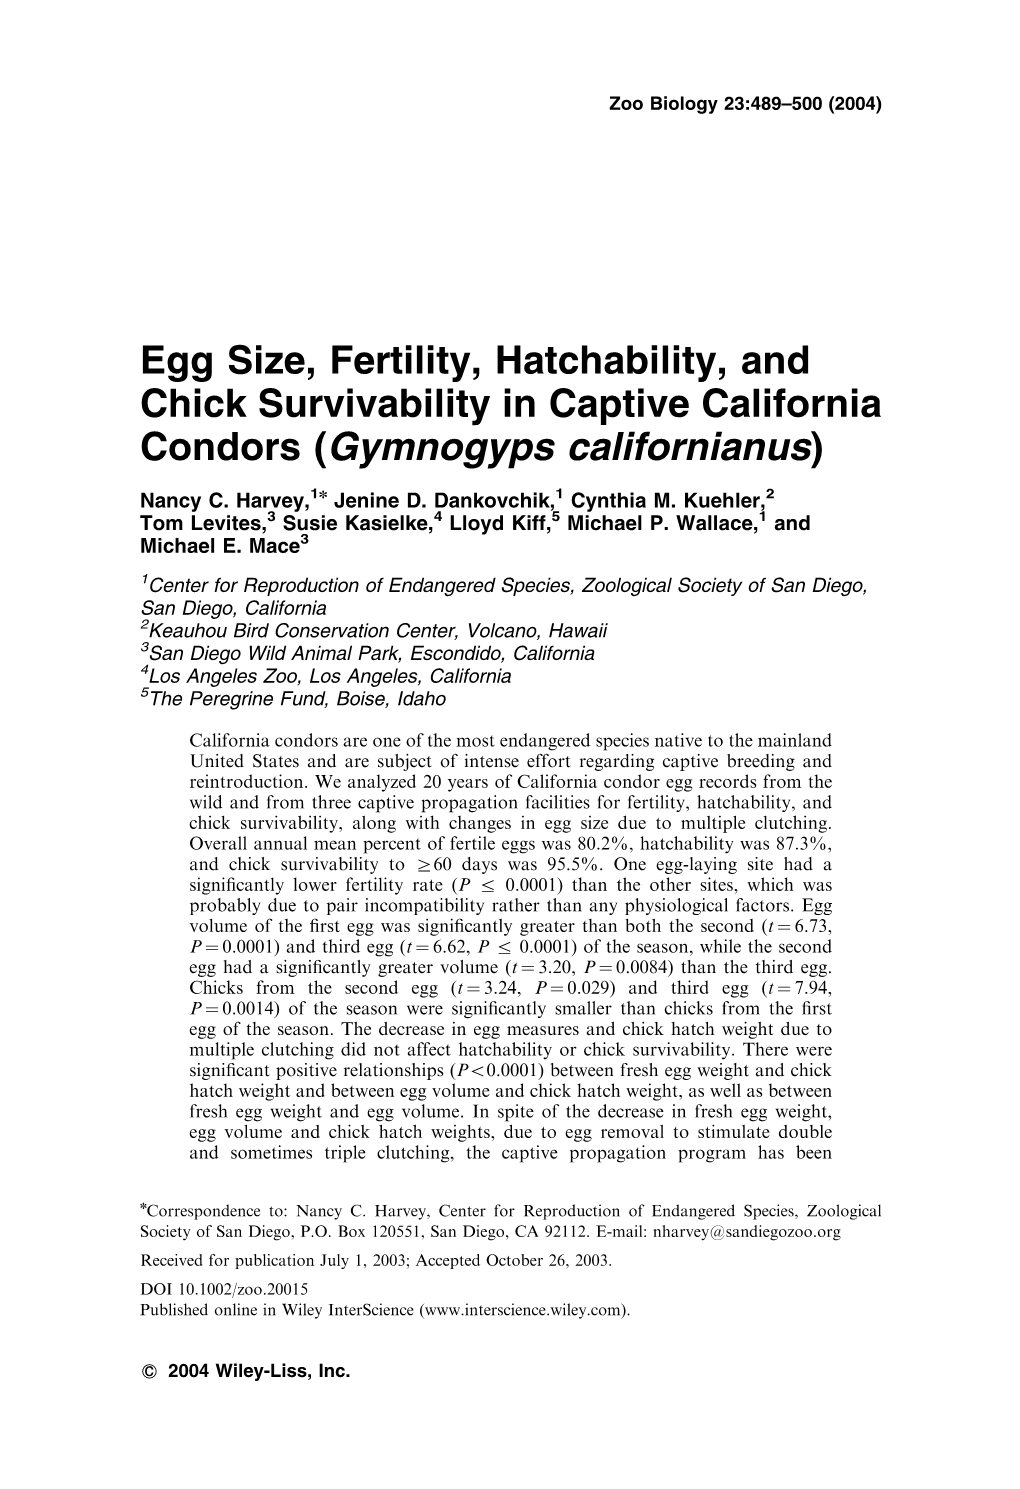 Egg Size, Fertility, Hatchability, and Chick Survivability in Captive California Condors (Gymnogyps Californianus)